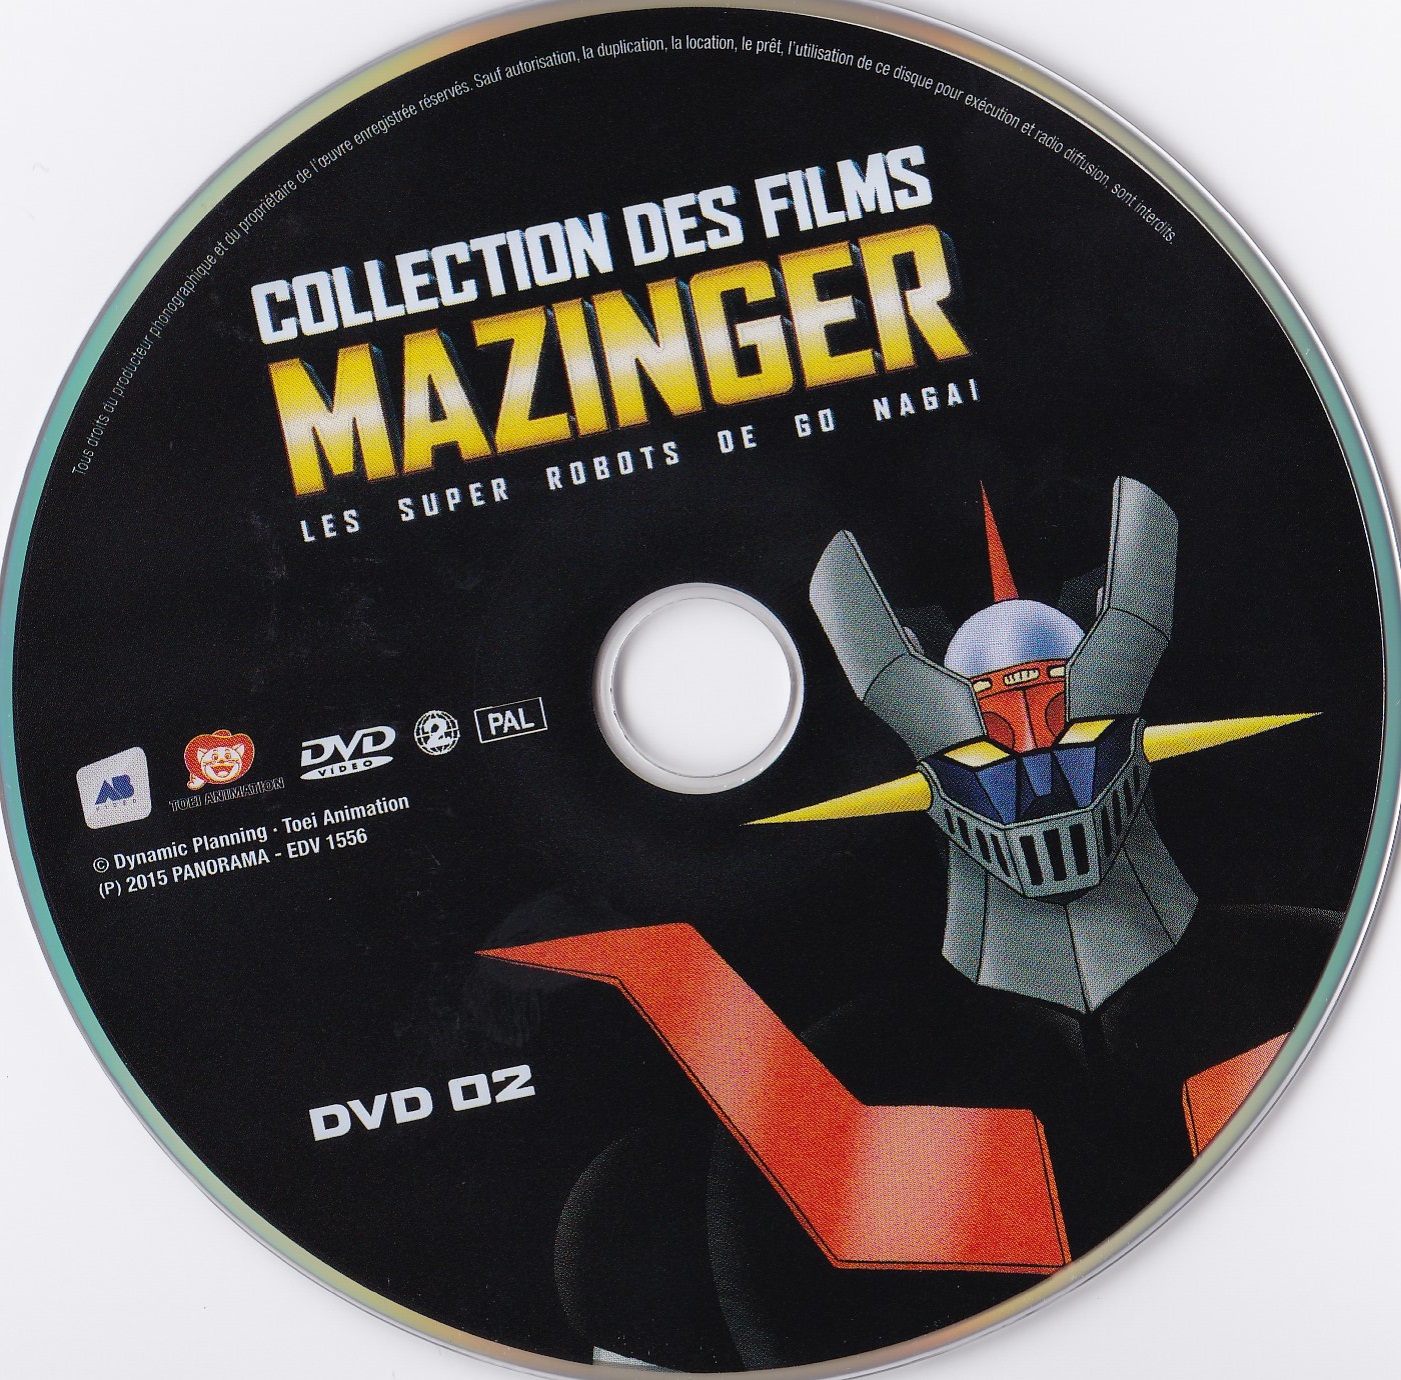 Mazinger DISC 02